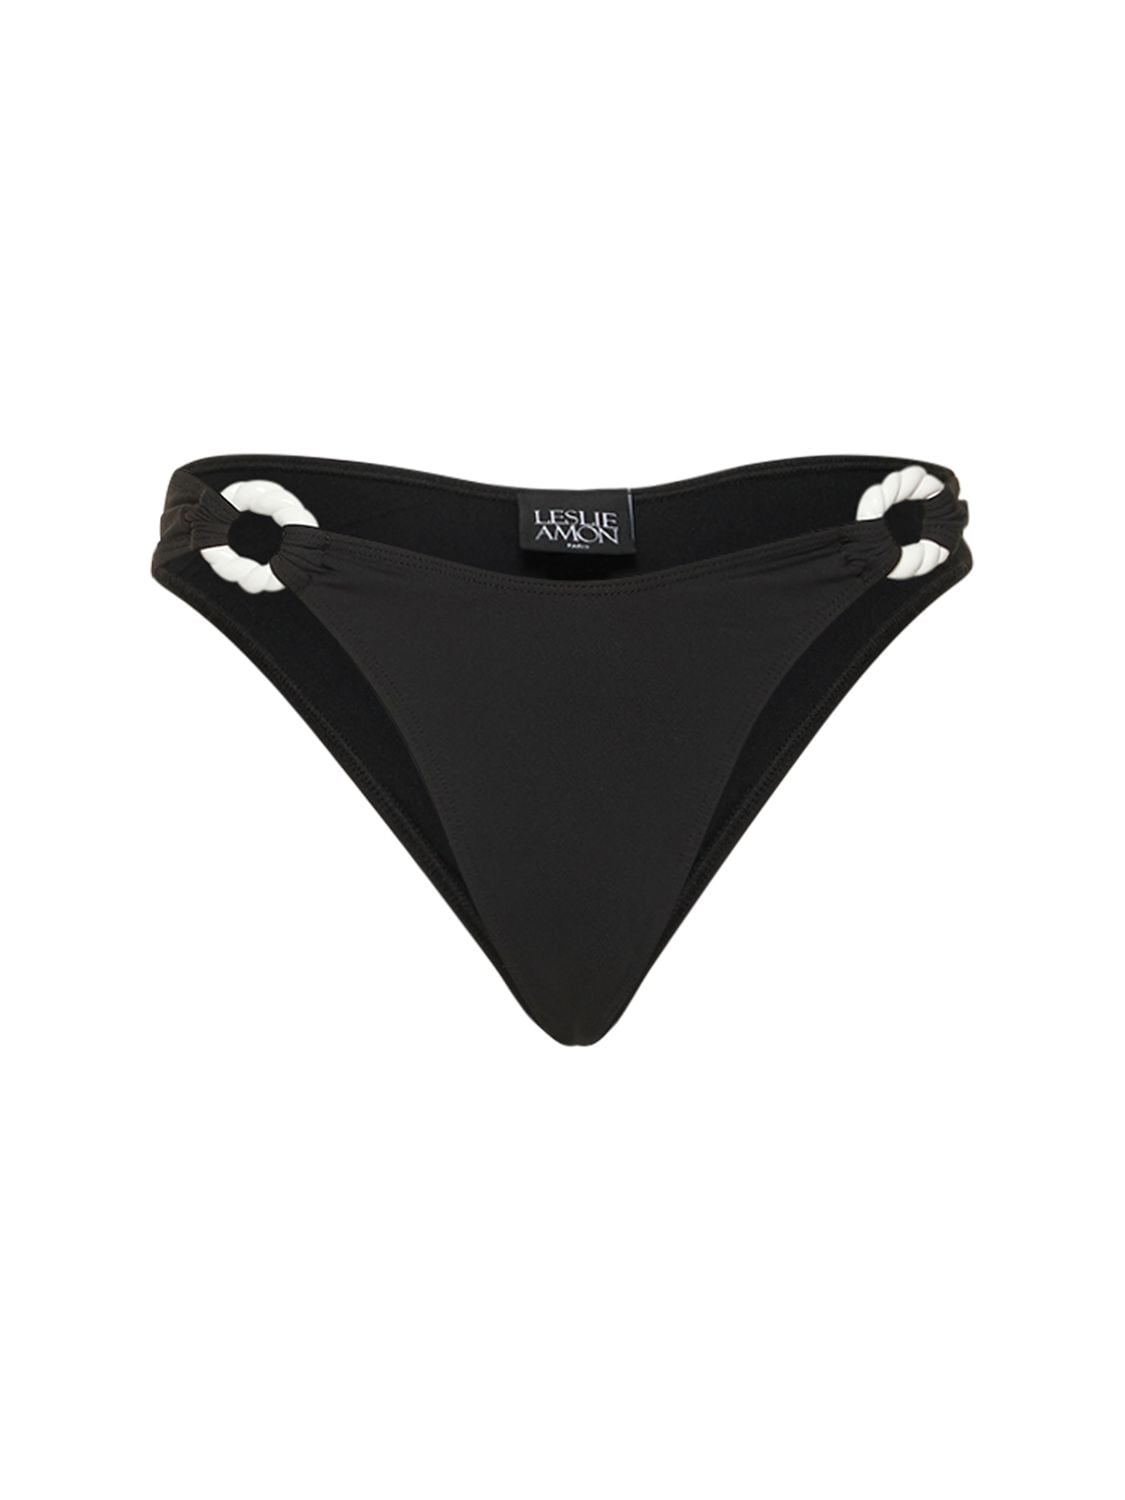 LESLIE AMON Poupy Bikini Bottom W/ring Details